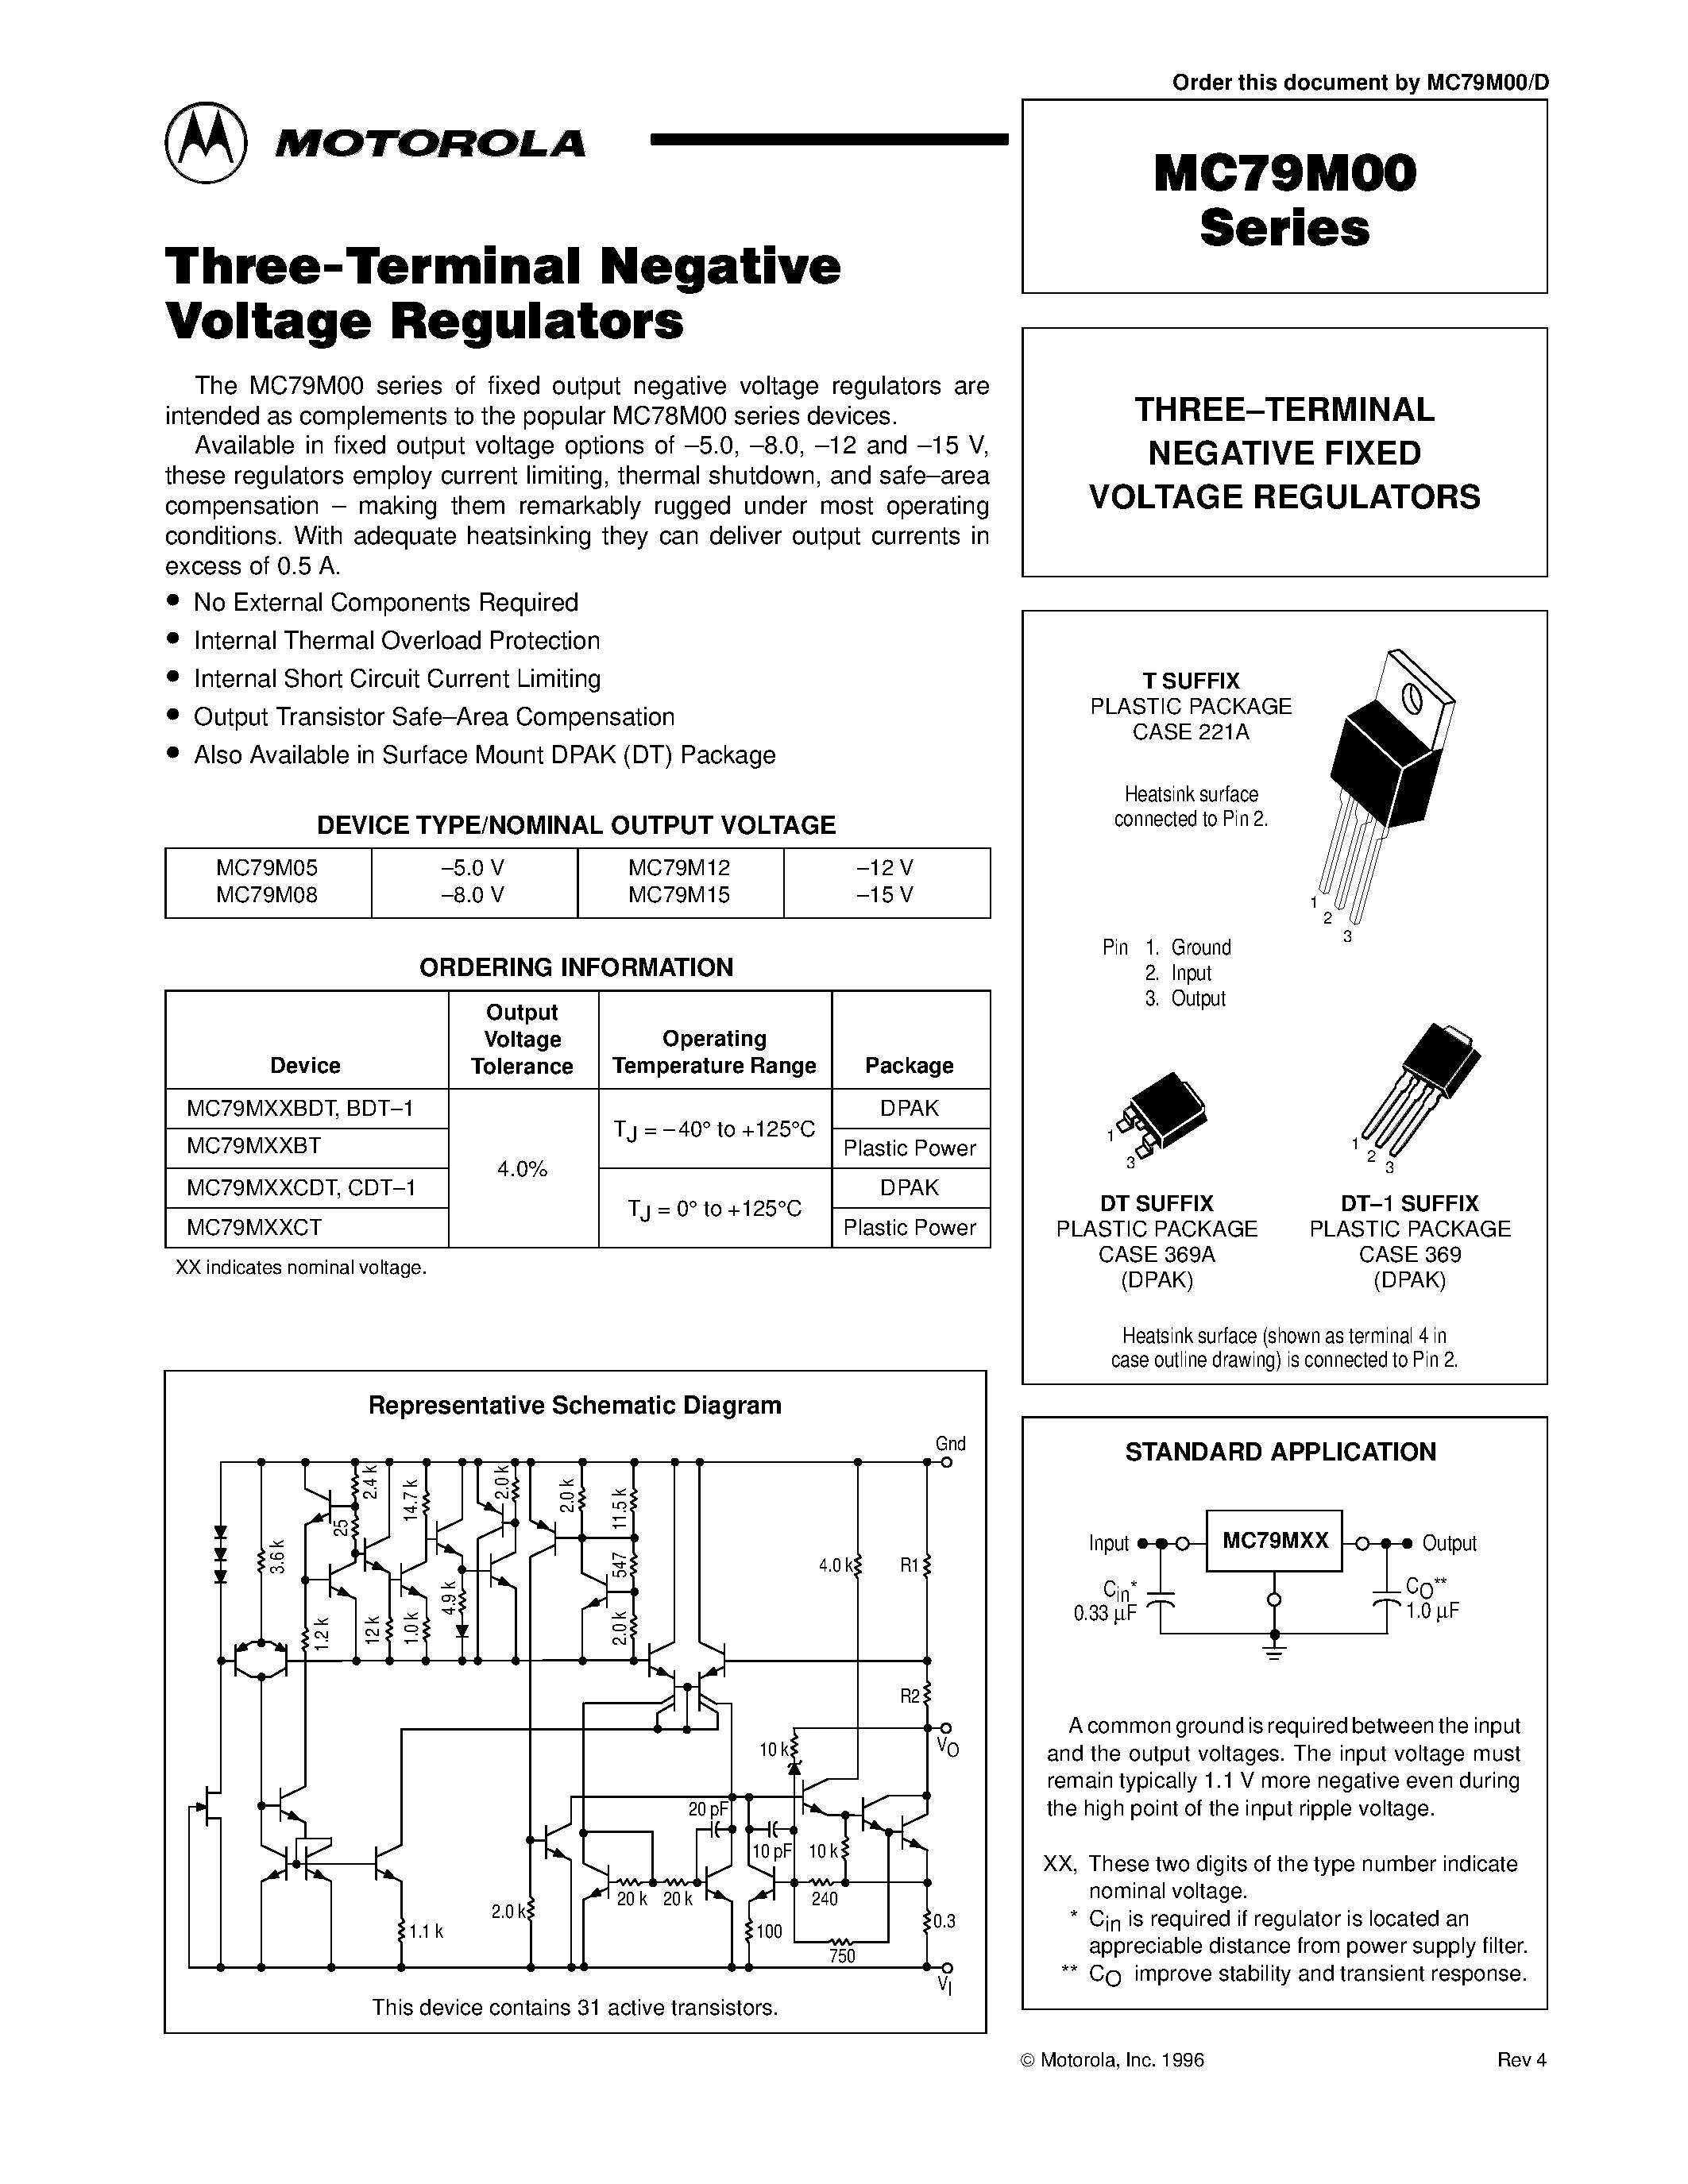 Datasheet MC79M15CT - THREE-TERMINAL NEGATIVE FIXED VOLTAGE REGULATORS page 1